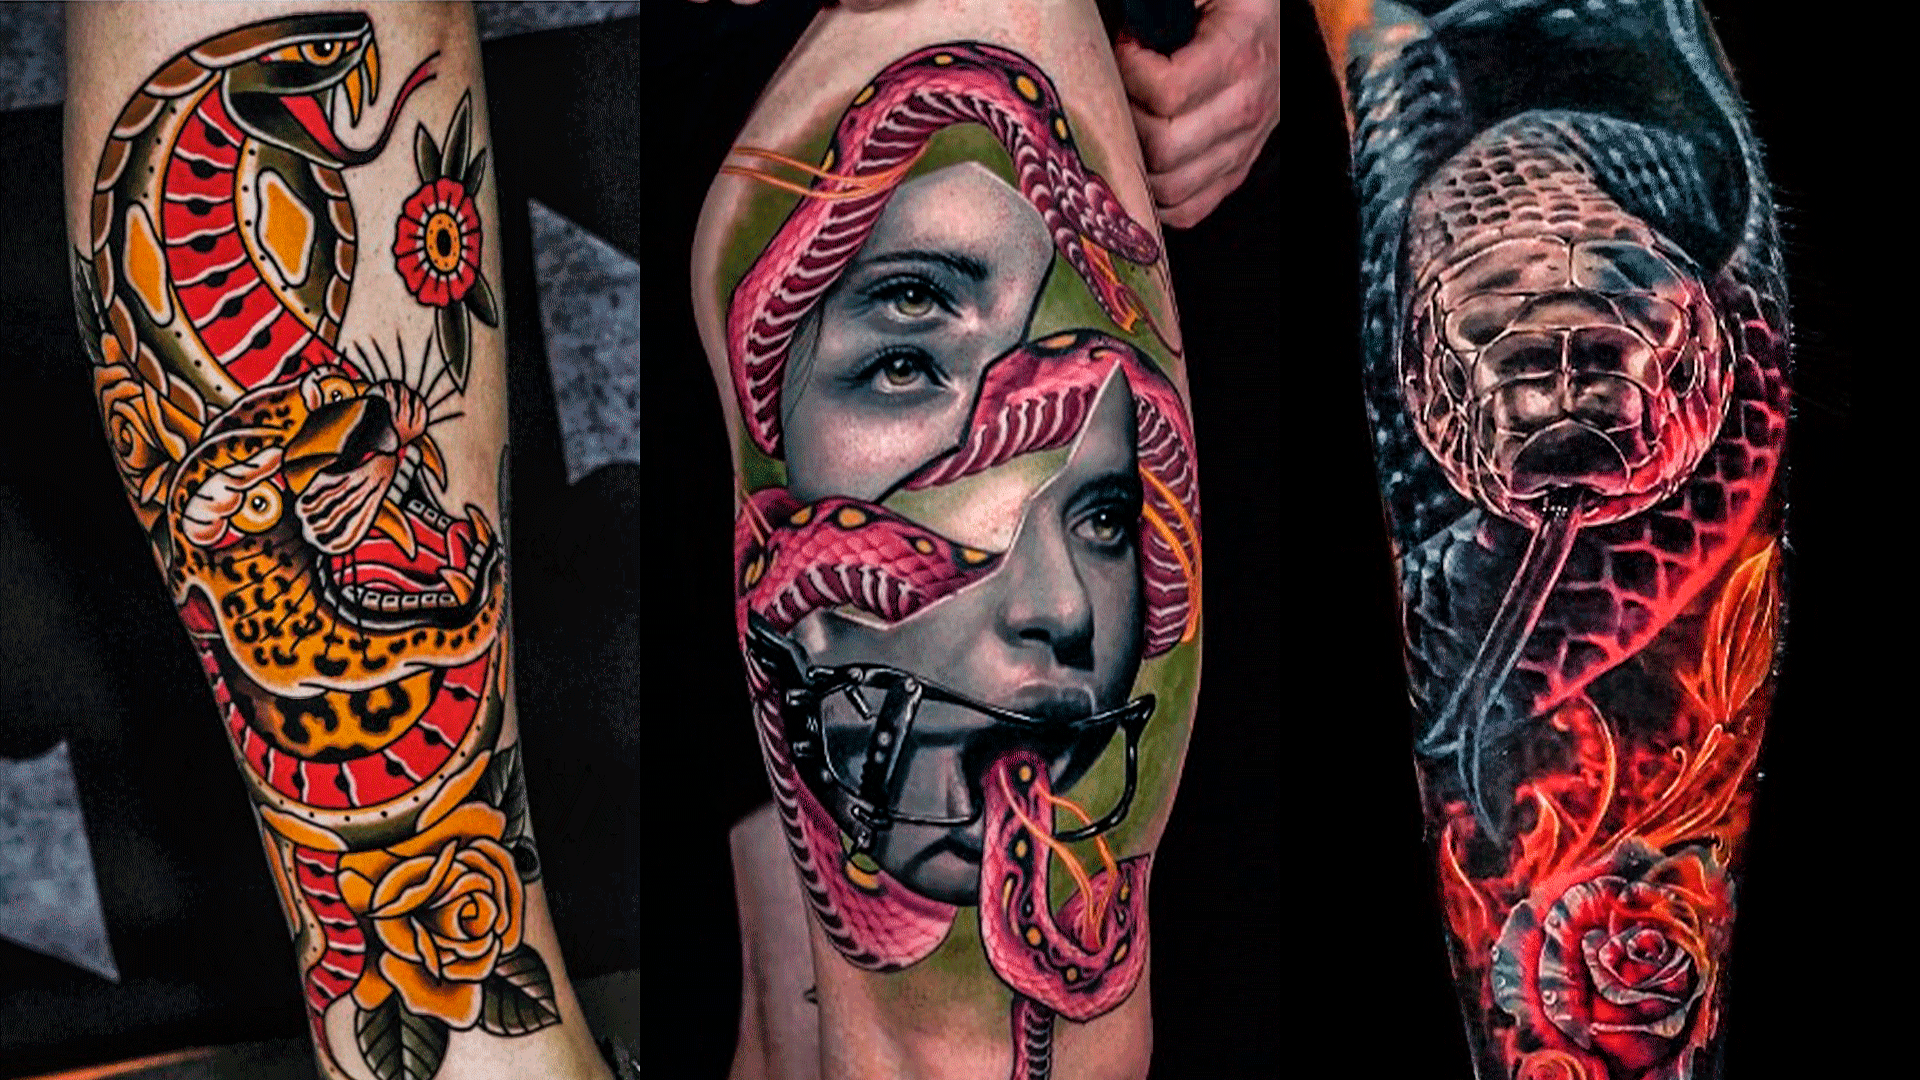 Snake Skull Rifle Tattoo by Jackie Rabbit by jackierabbit12 on DeviantArt